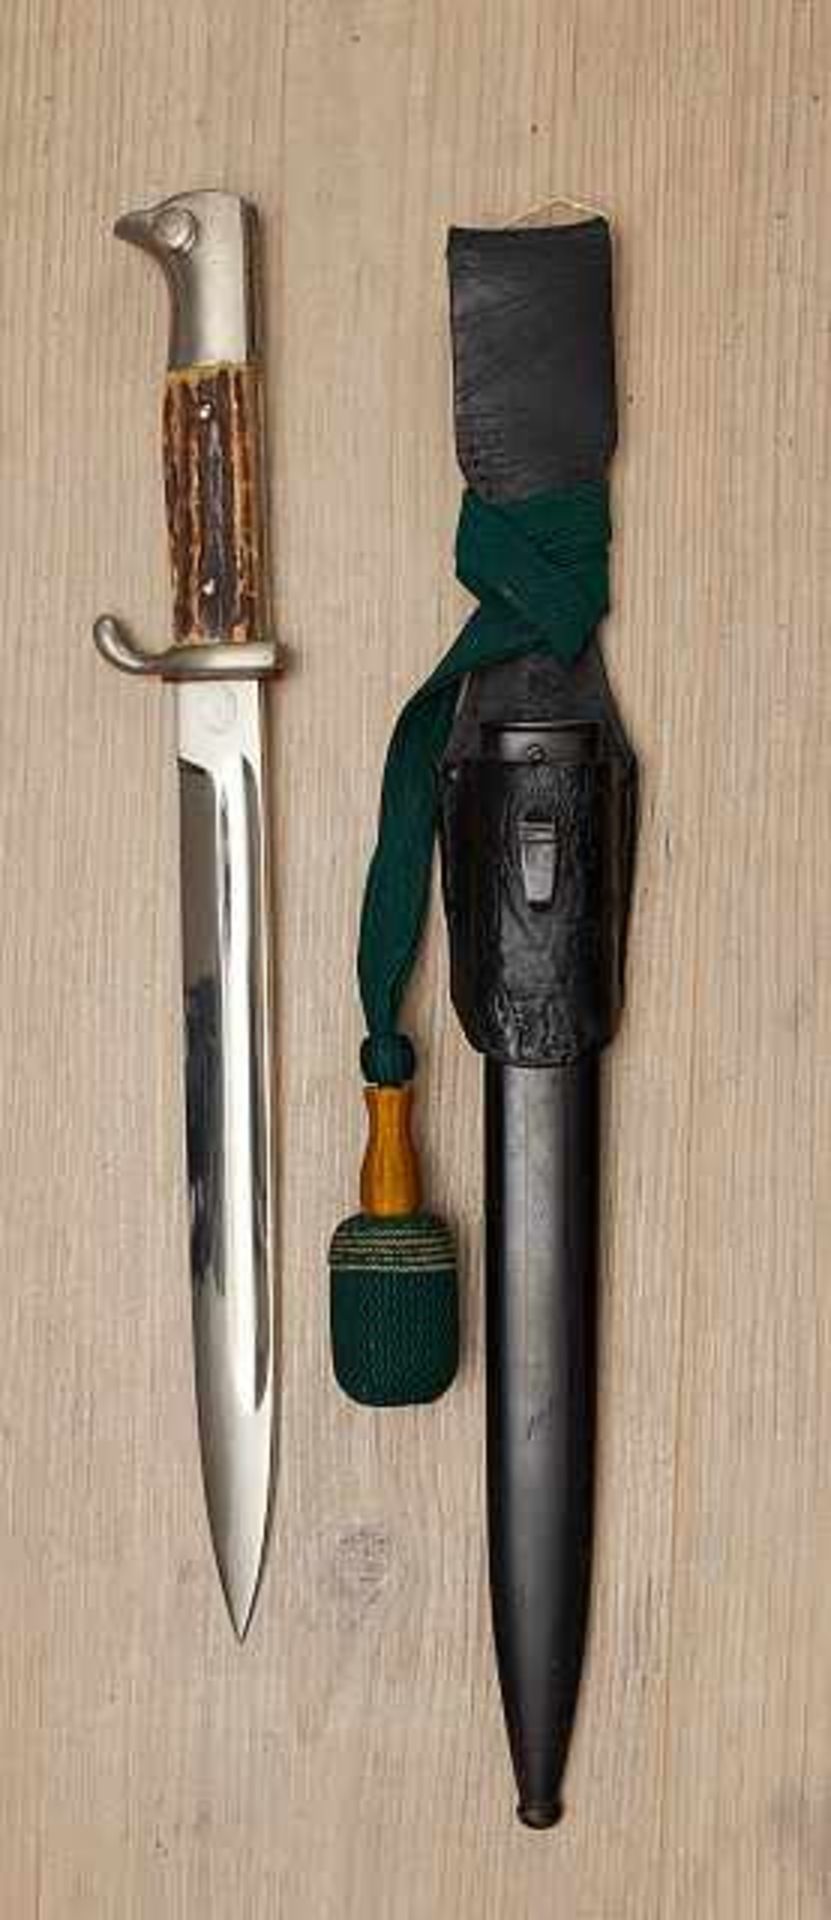 Deutsches Reich 1933 - 1945 - Heer - Edged Weapons : Army Dress Bayonet.Hilt shows almost no wear/